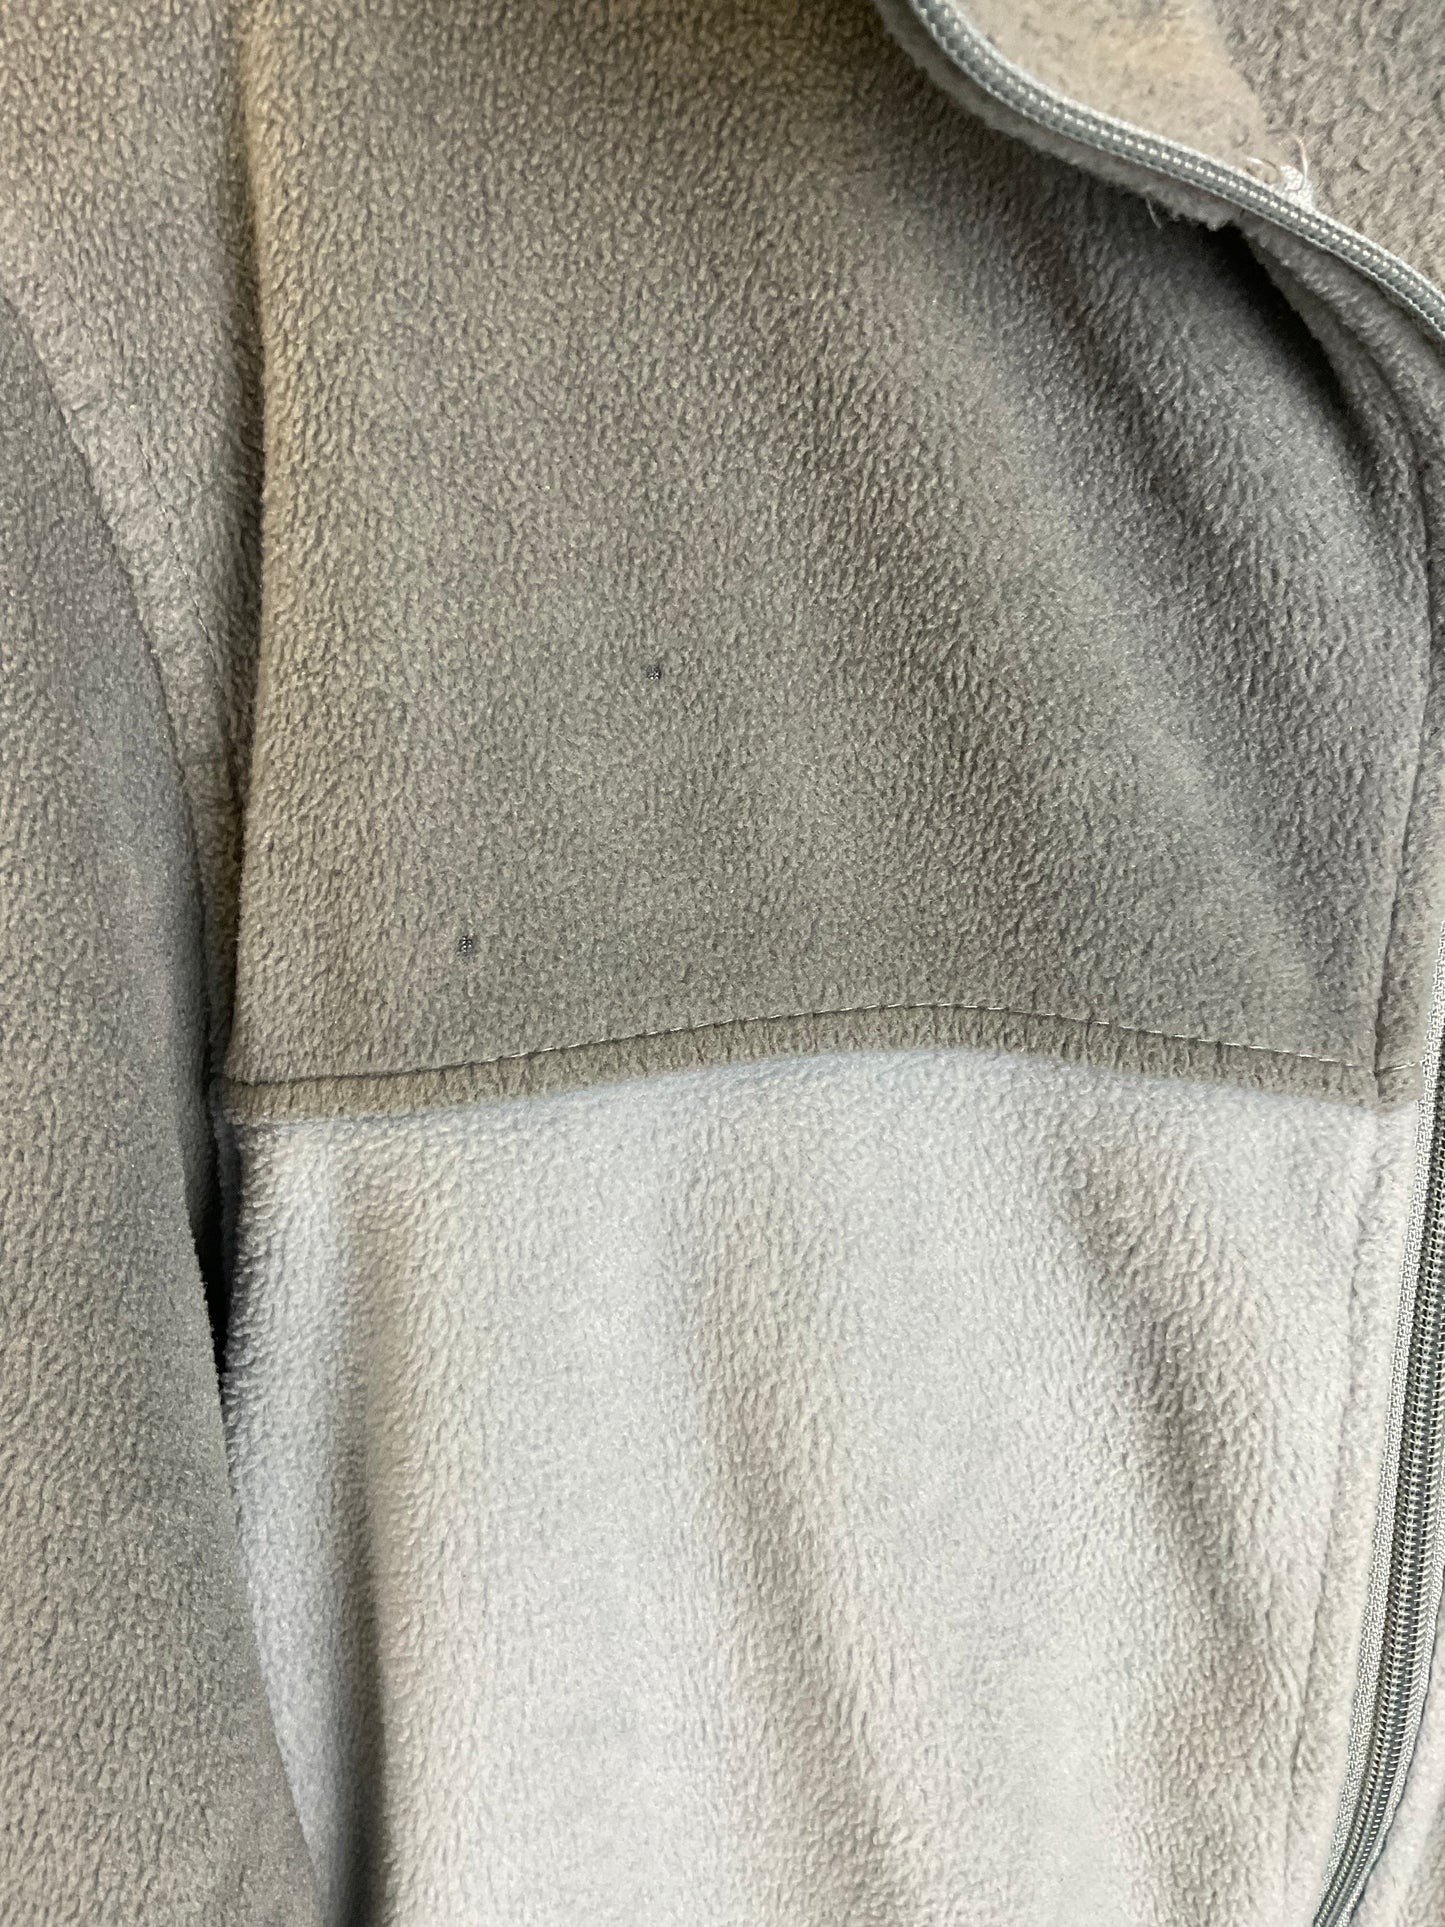 Jacket Fleece By Columbia  Size: L